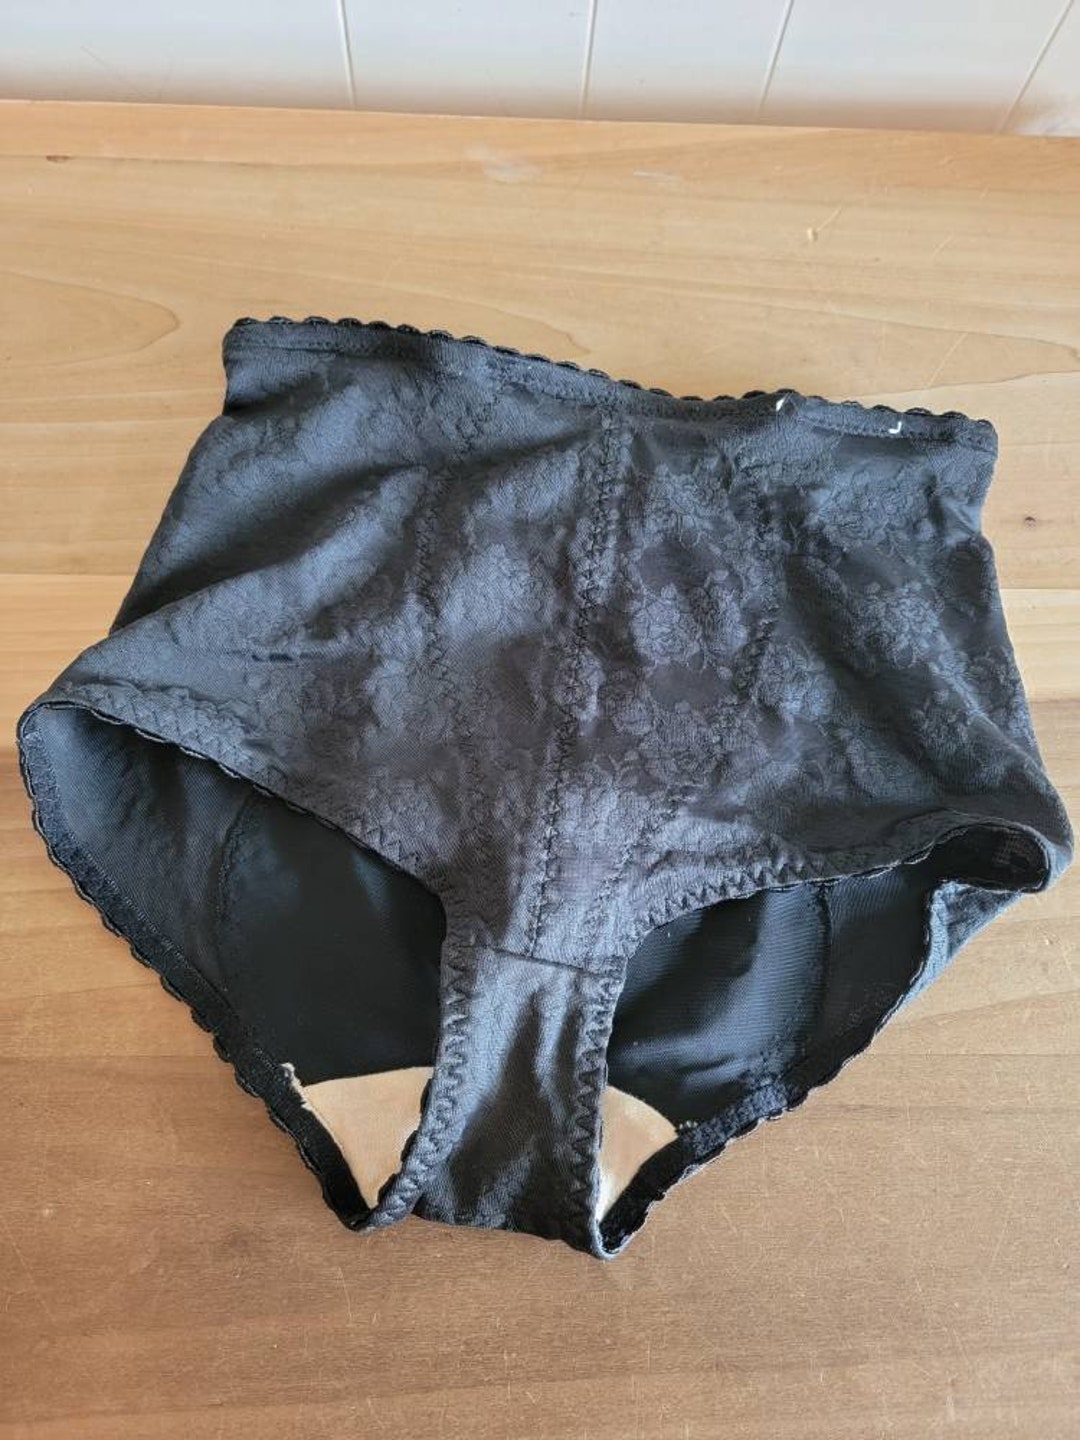 1948 women's black Panties girdle original Youthcraft creation